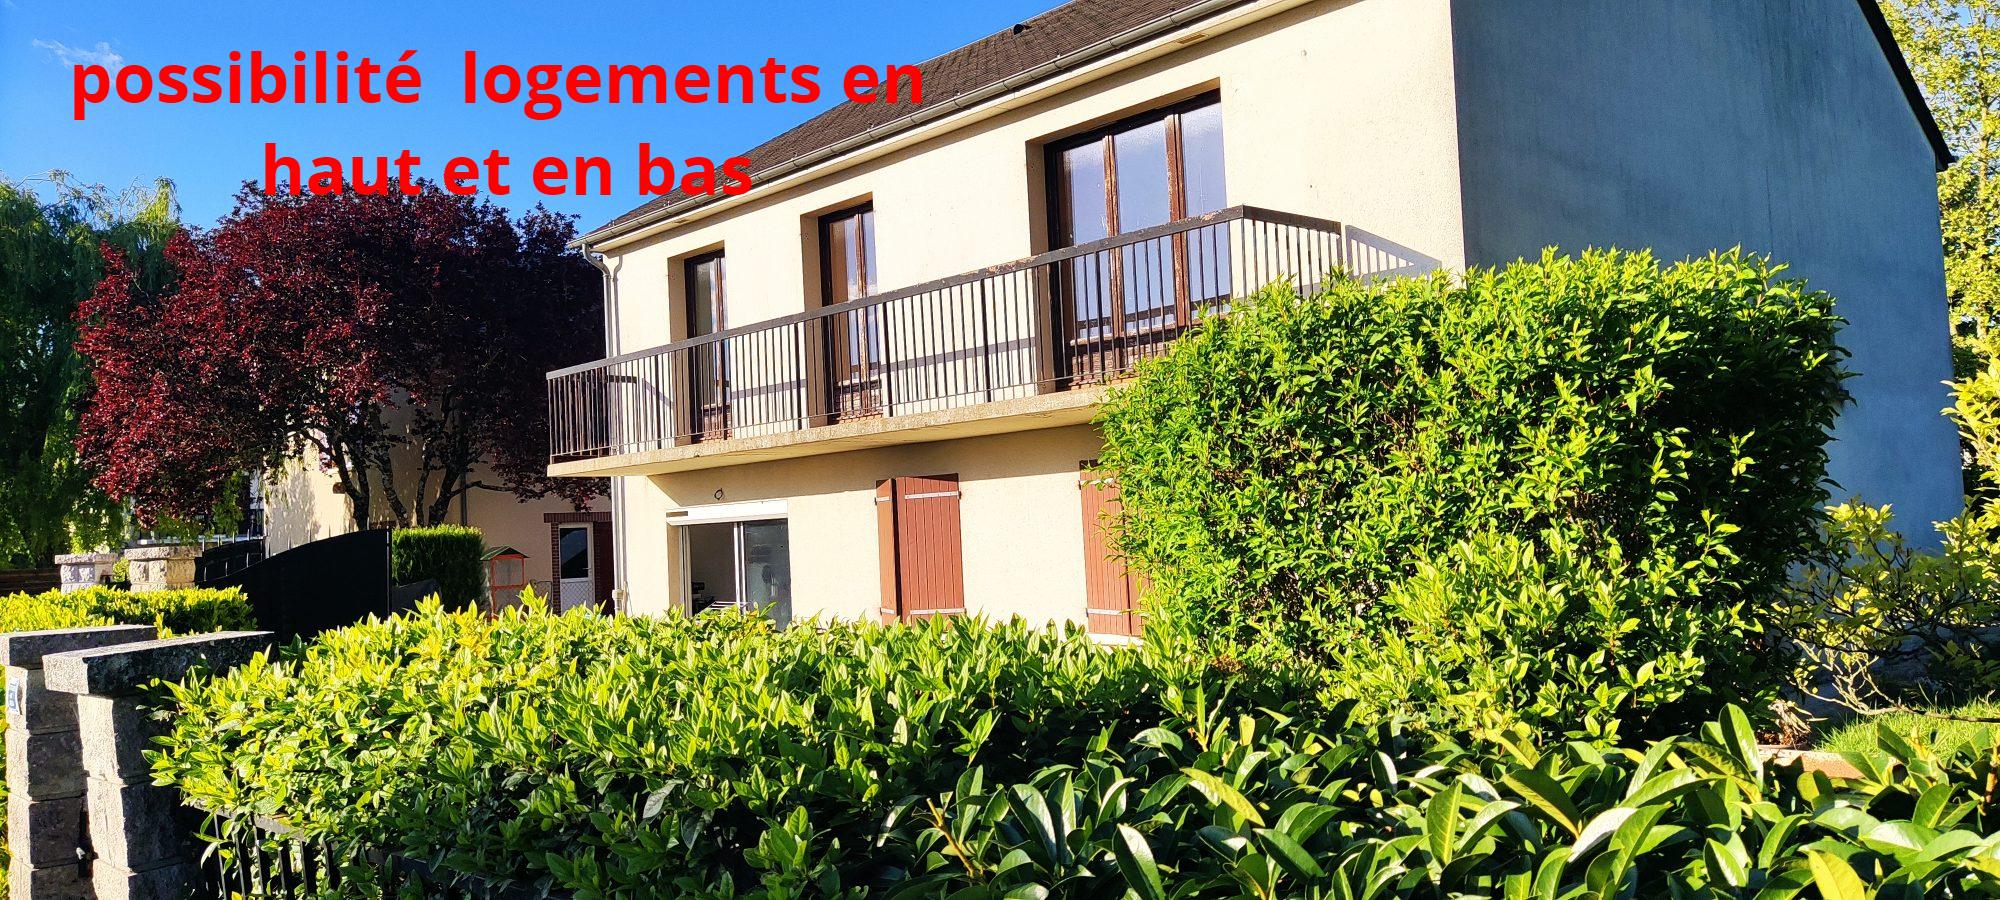 Vente Maison 180m² 9 Pièces à Saint-Avertin (37550) - Agencimmo.Com